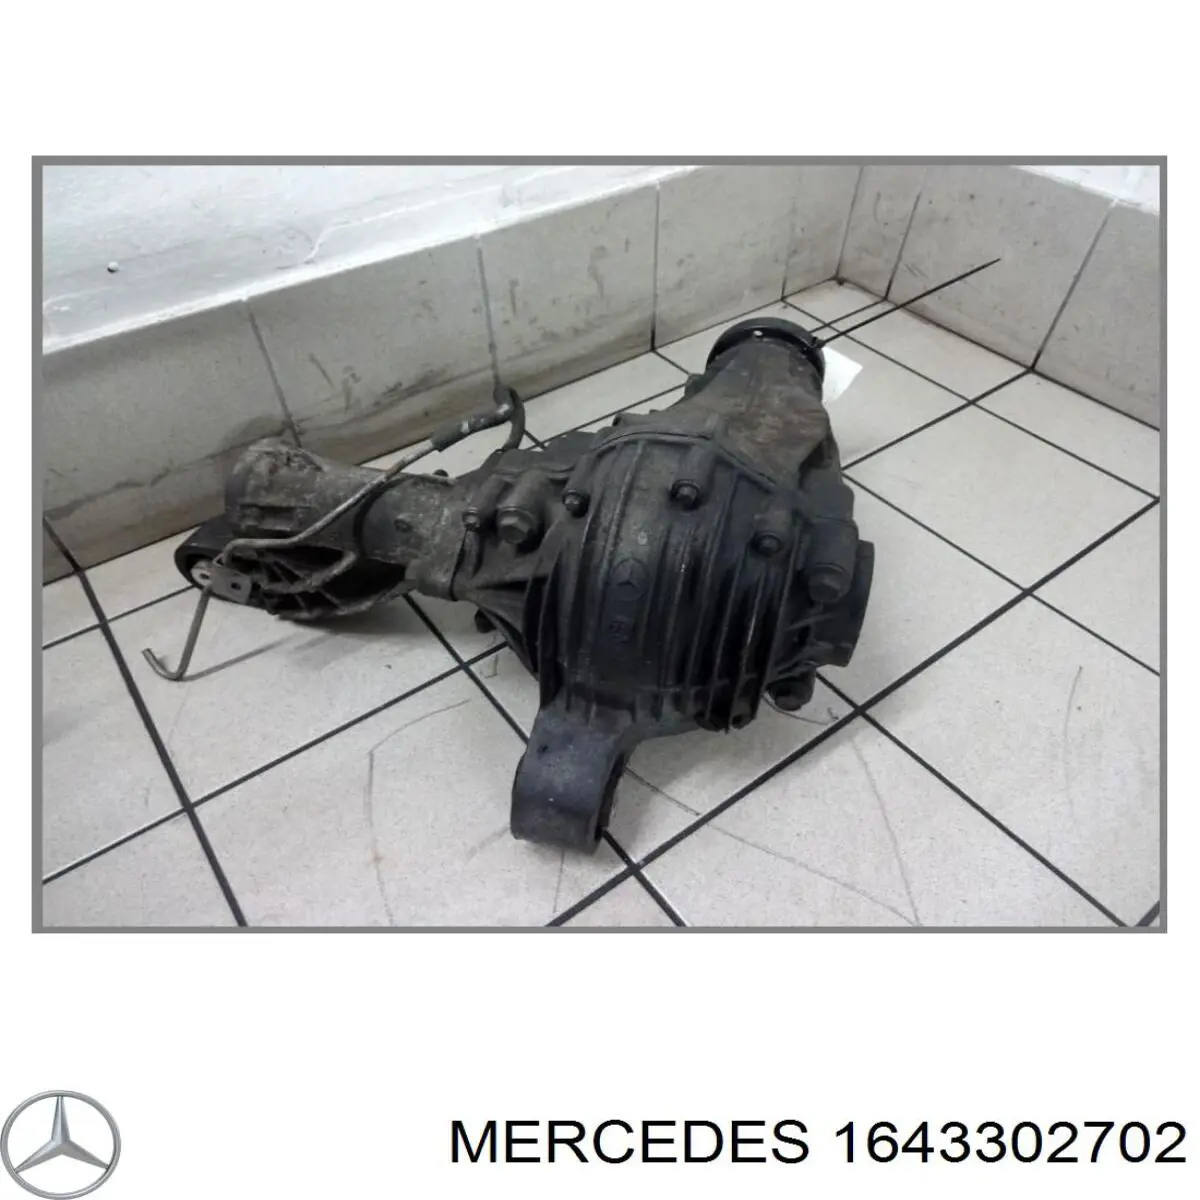 A1643302702 Mercedes 